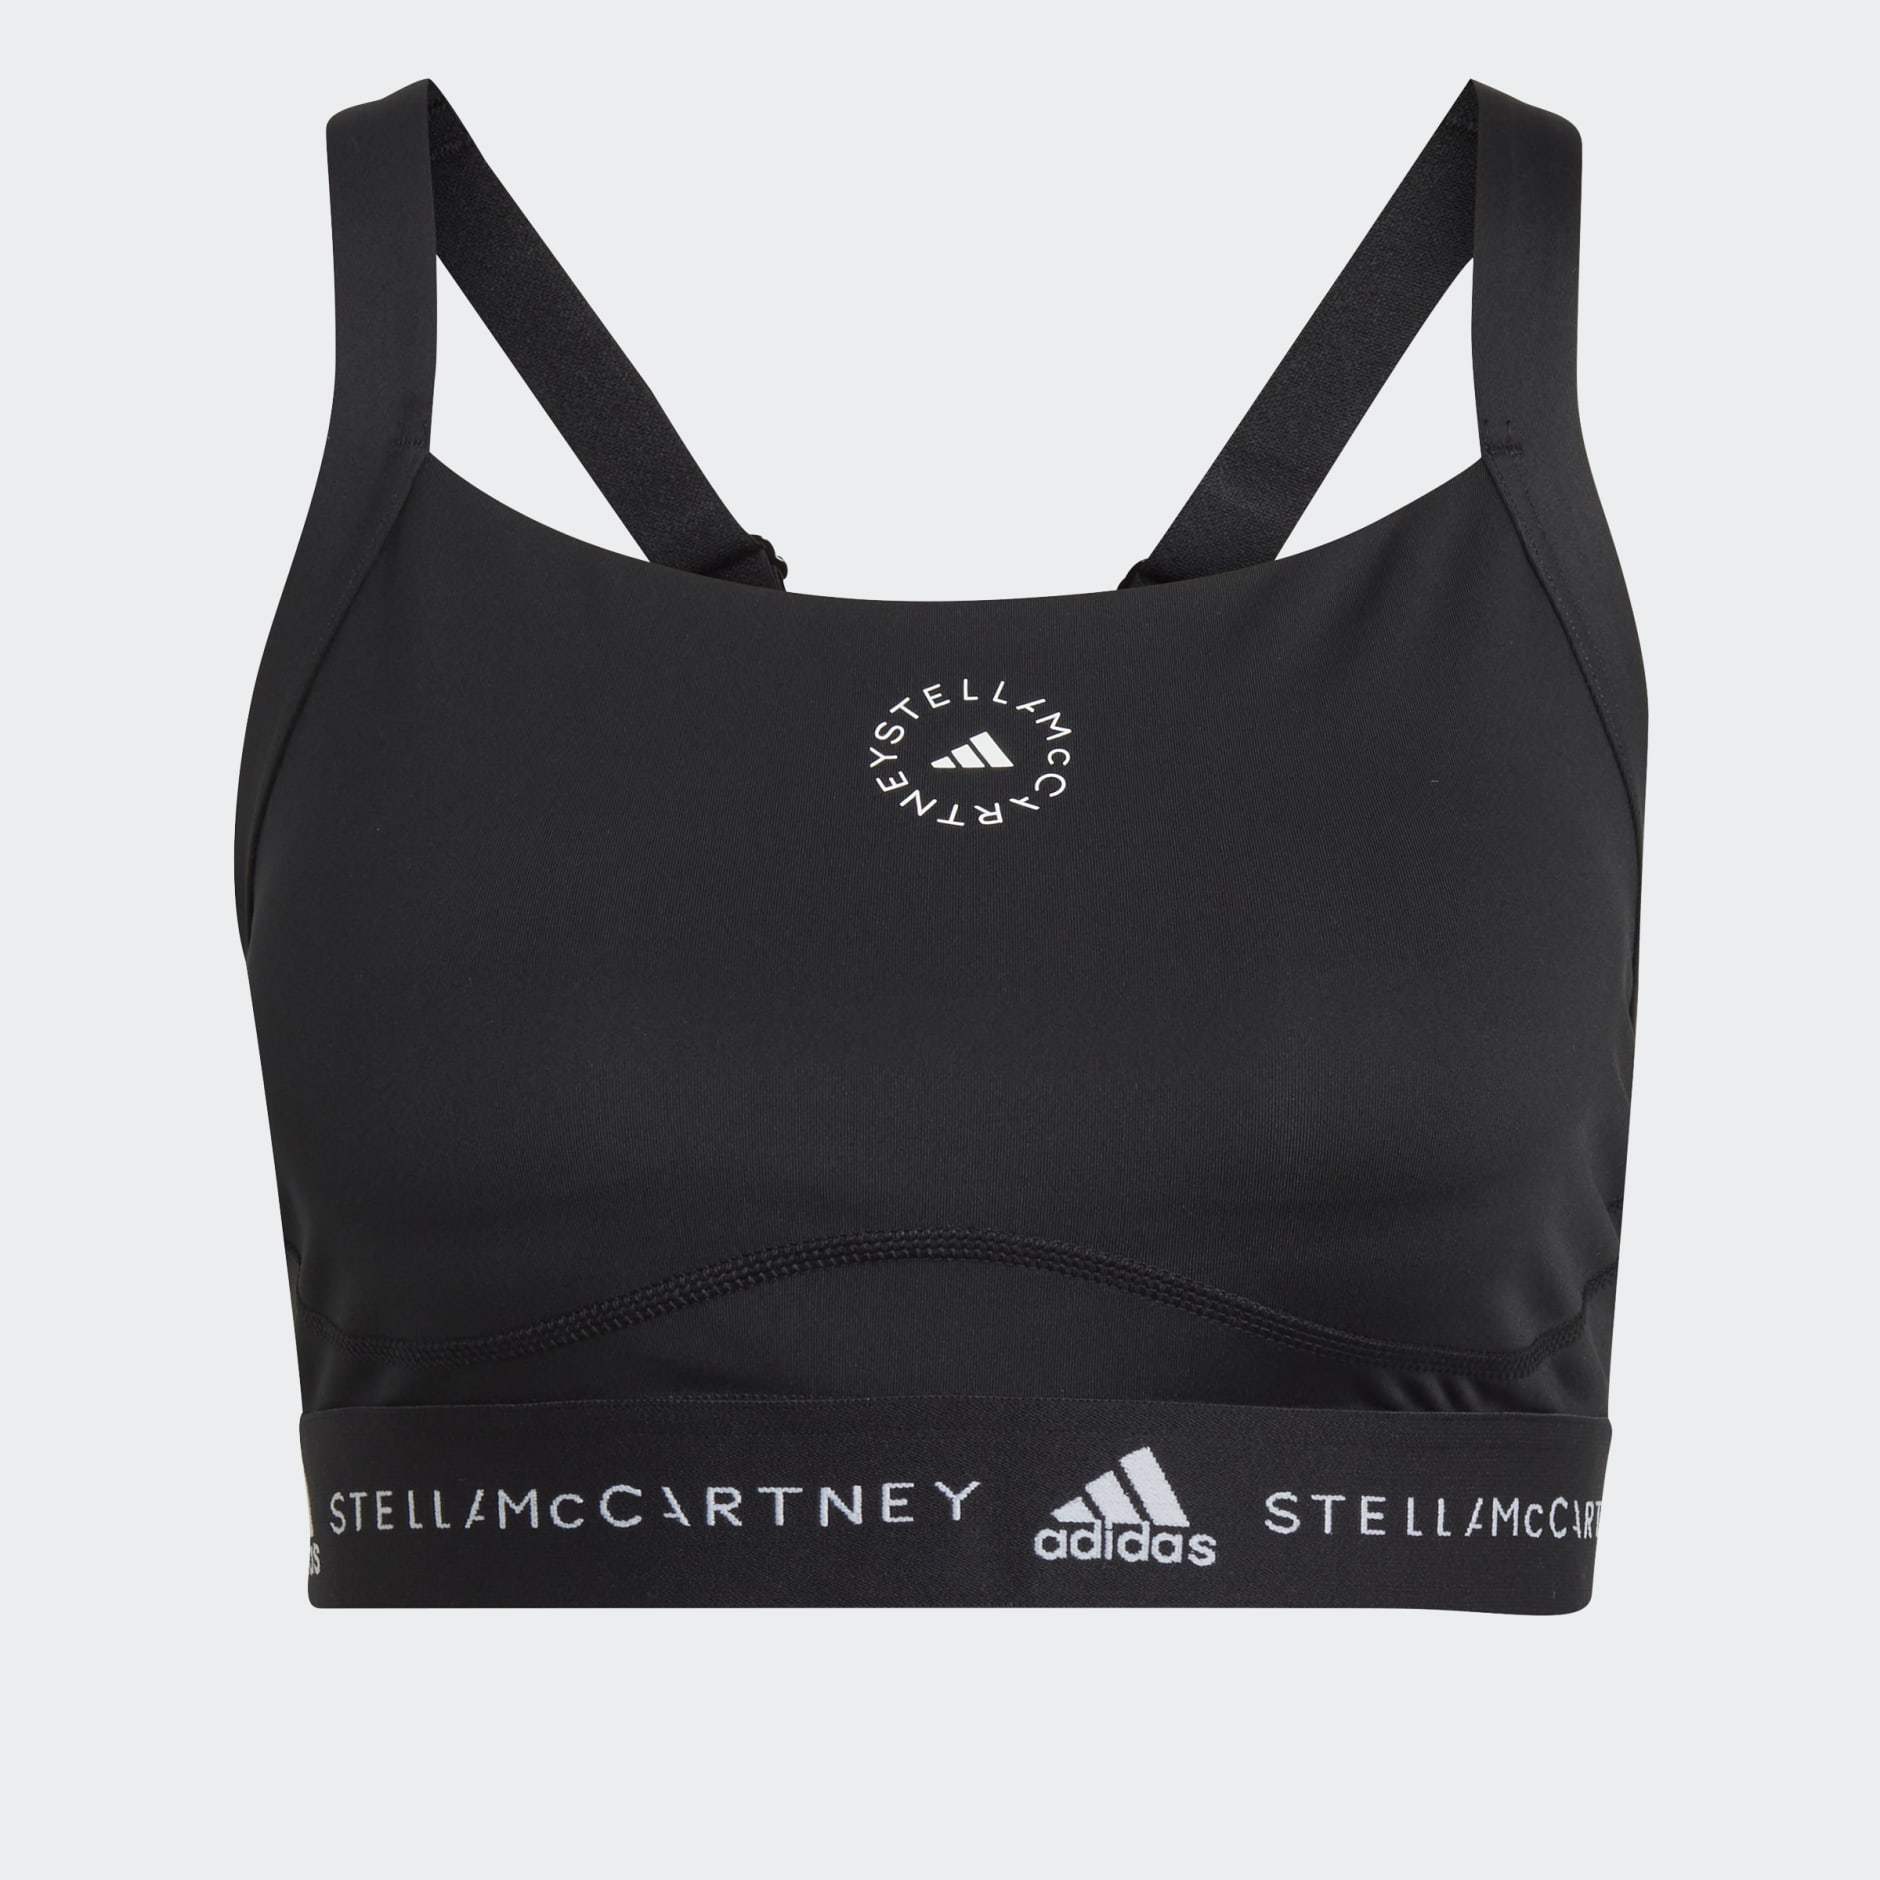 adidas by Stella McCartney Medium support sports bra - black - Zalando.de